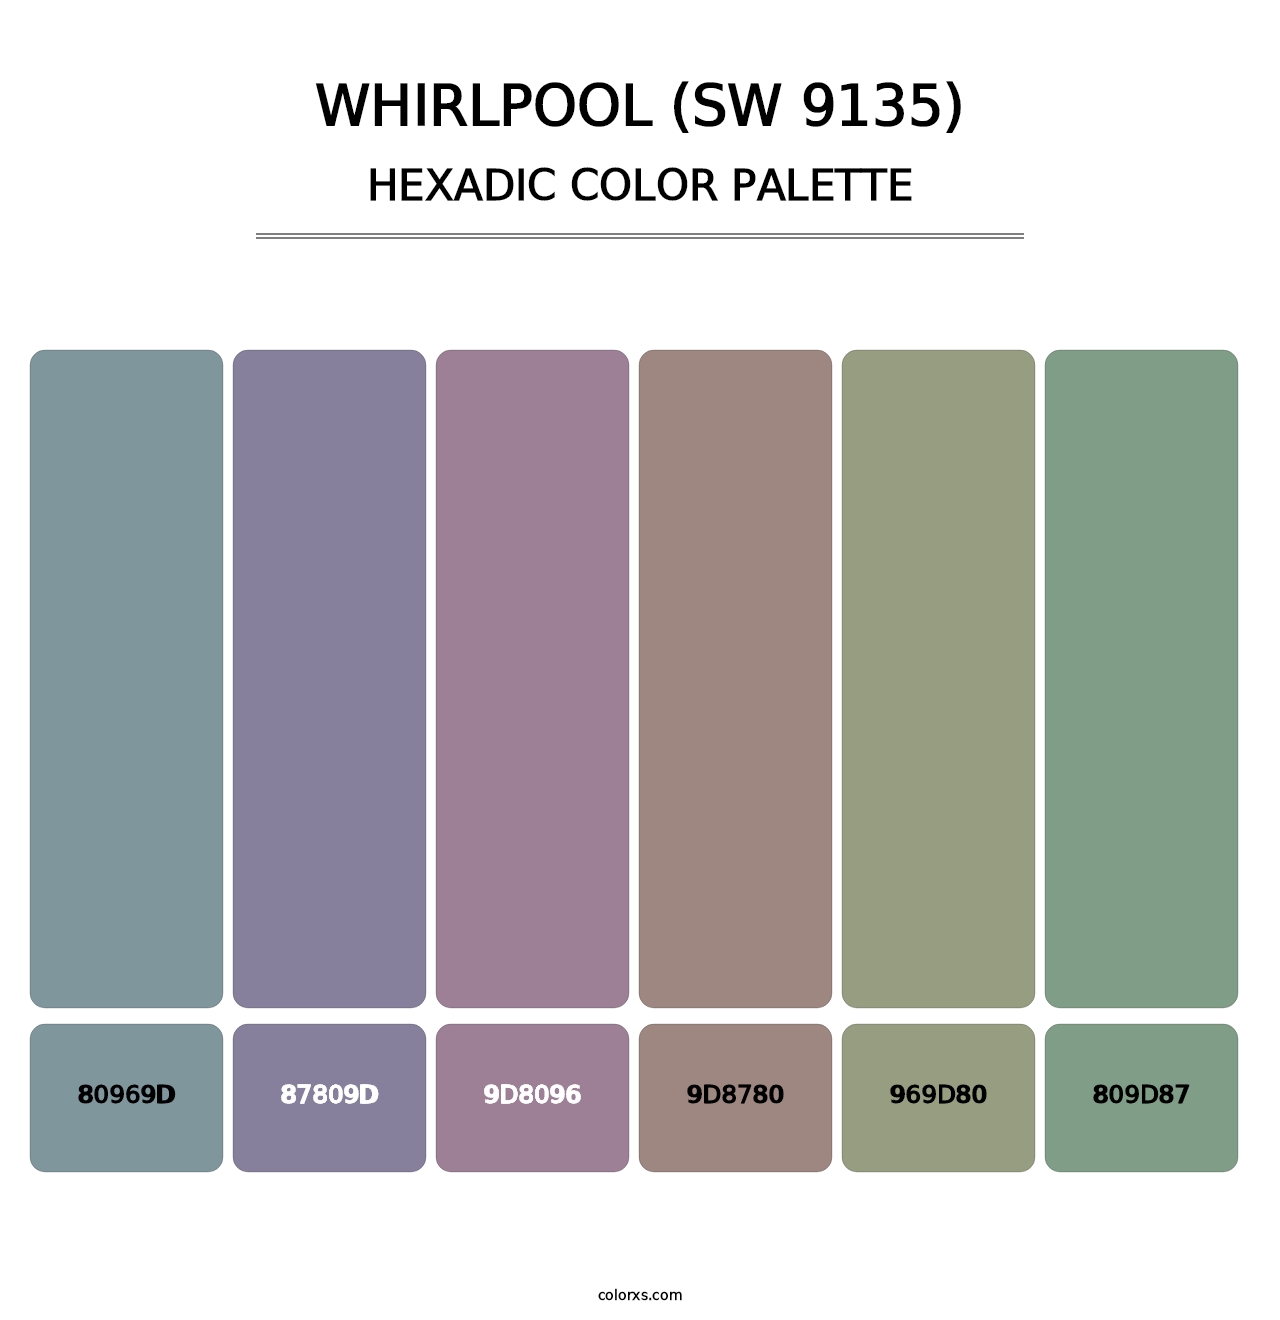 Whirlpool (SW 9135) - Hexadic Color Palette